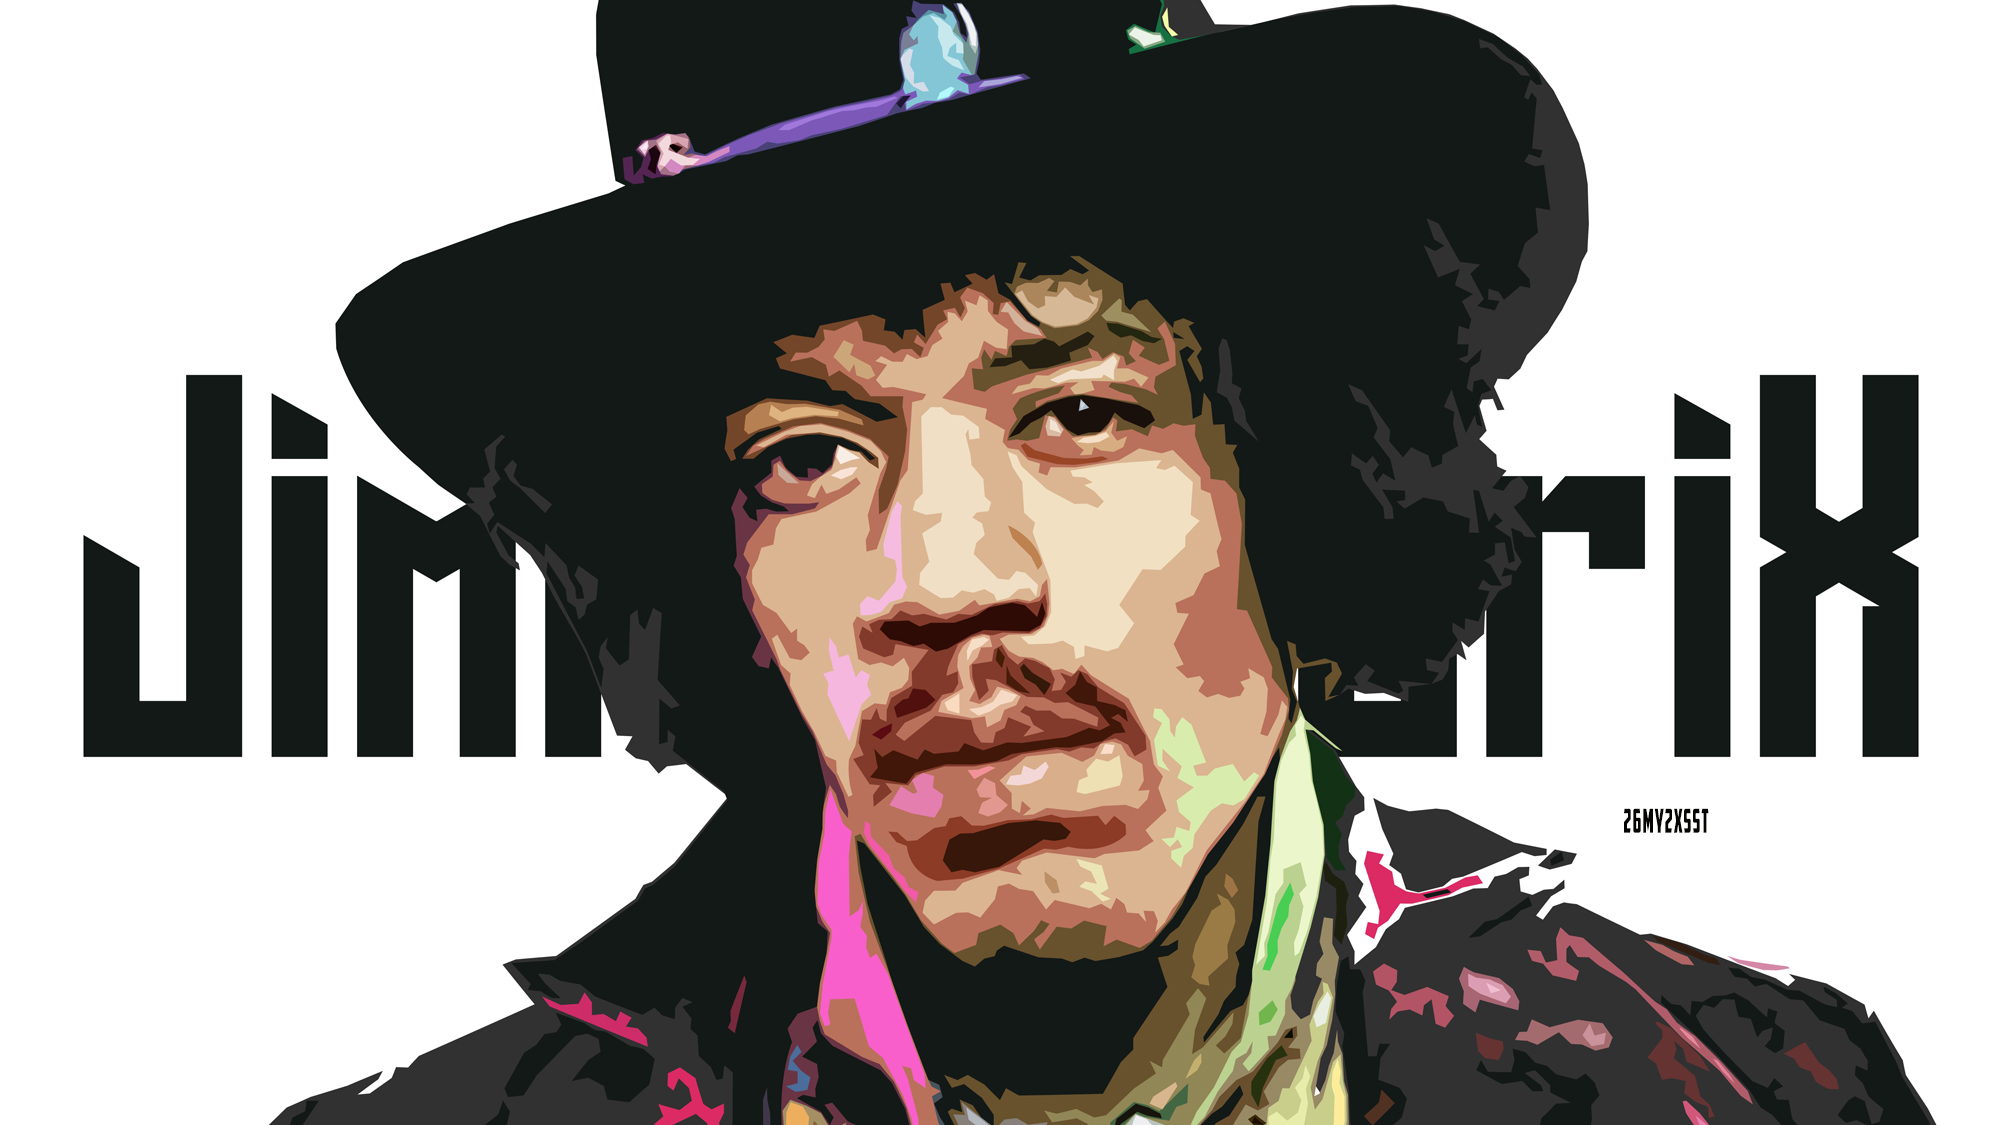 Jimi Hendrix Musician Music Rock Music Portrait Artistic 2000x1125